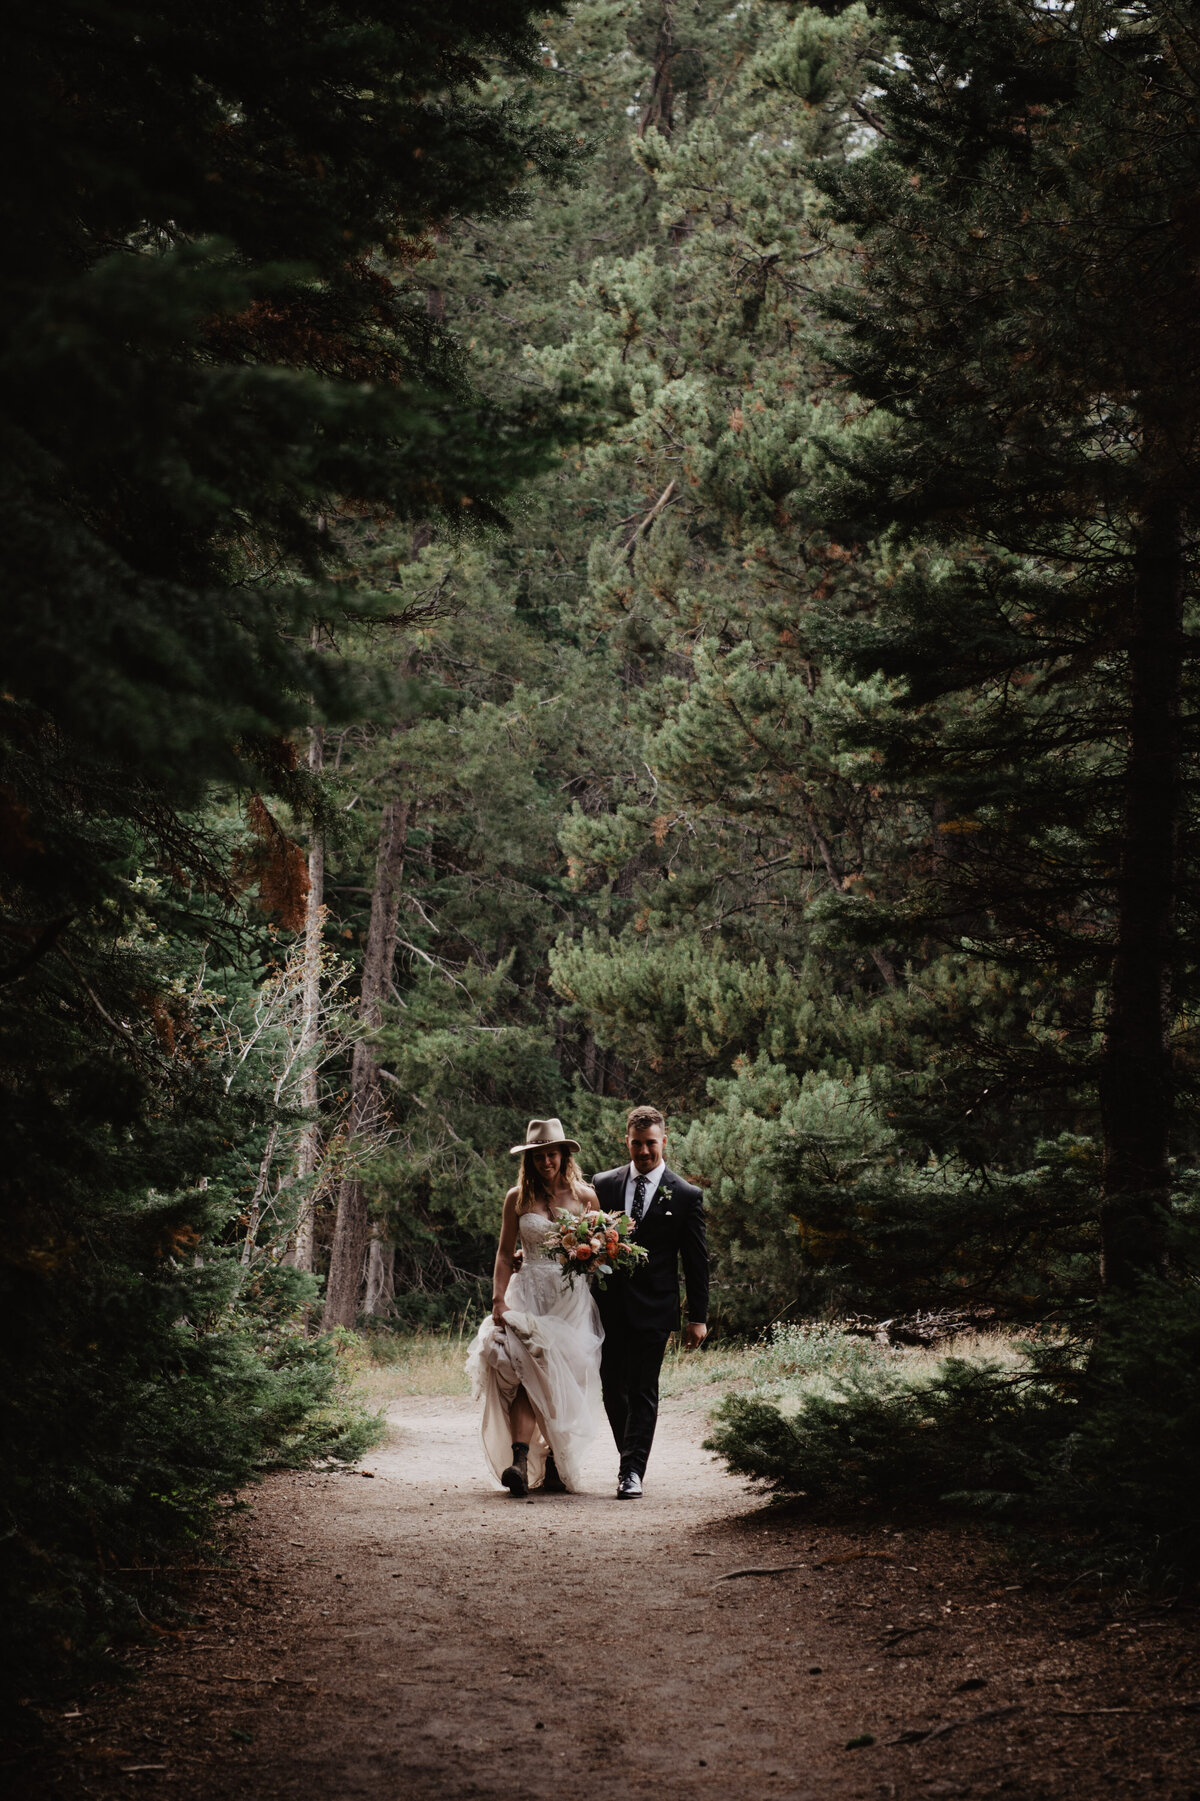 Jackson Hole Photographers capture bride and groom walking together during bridal portraits